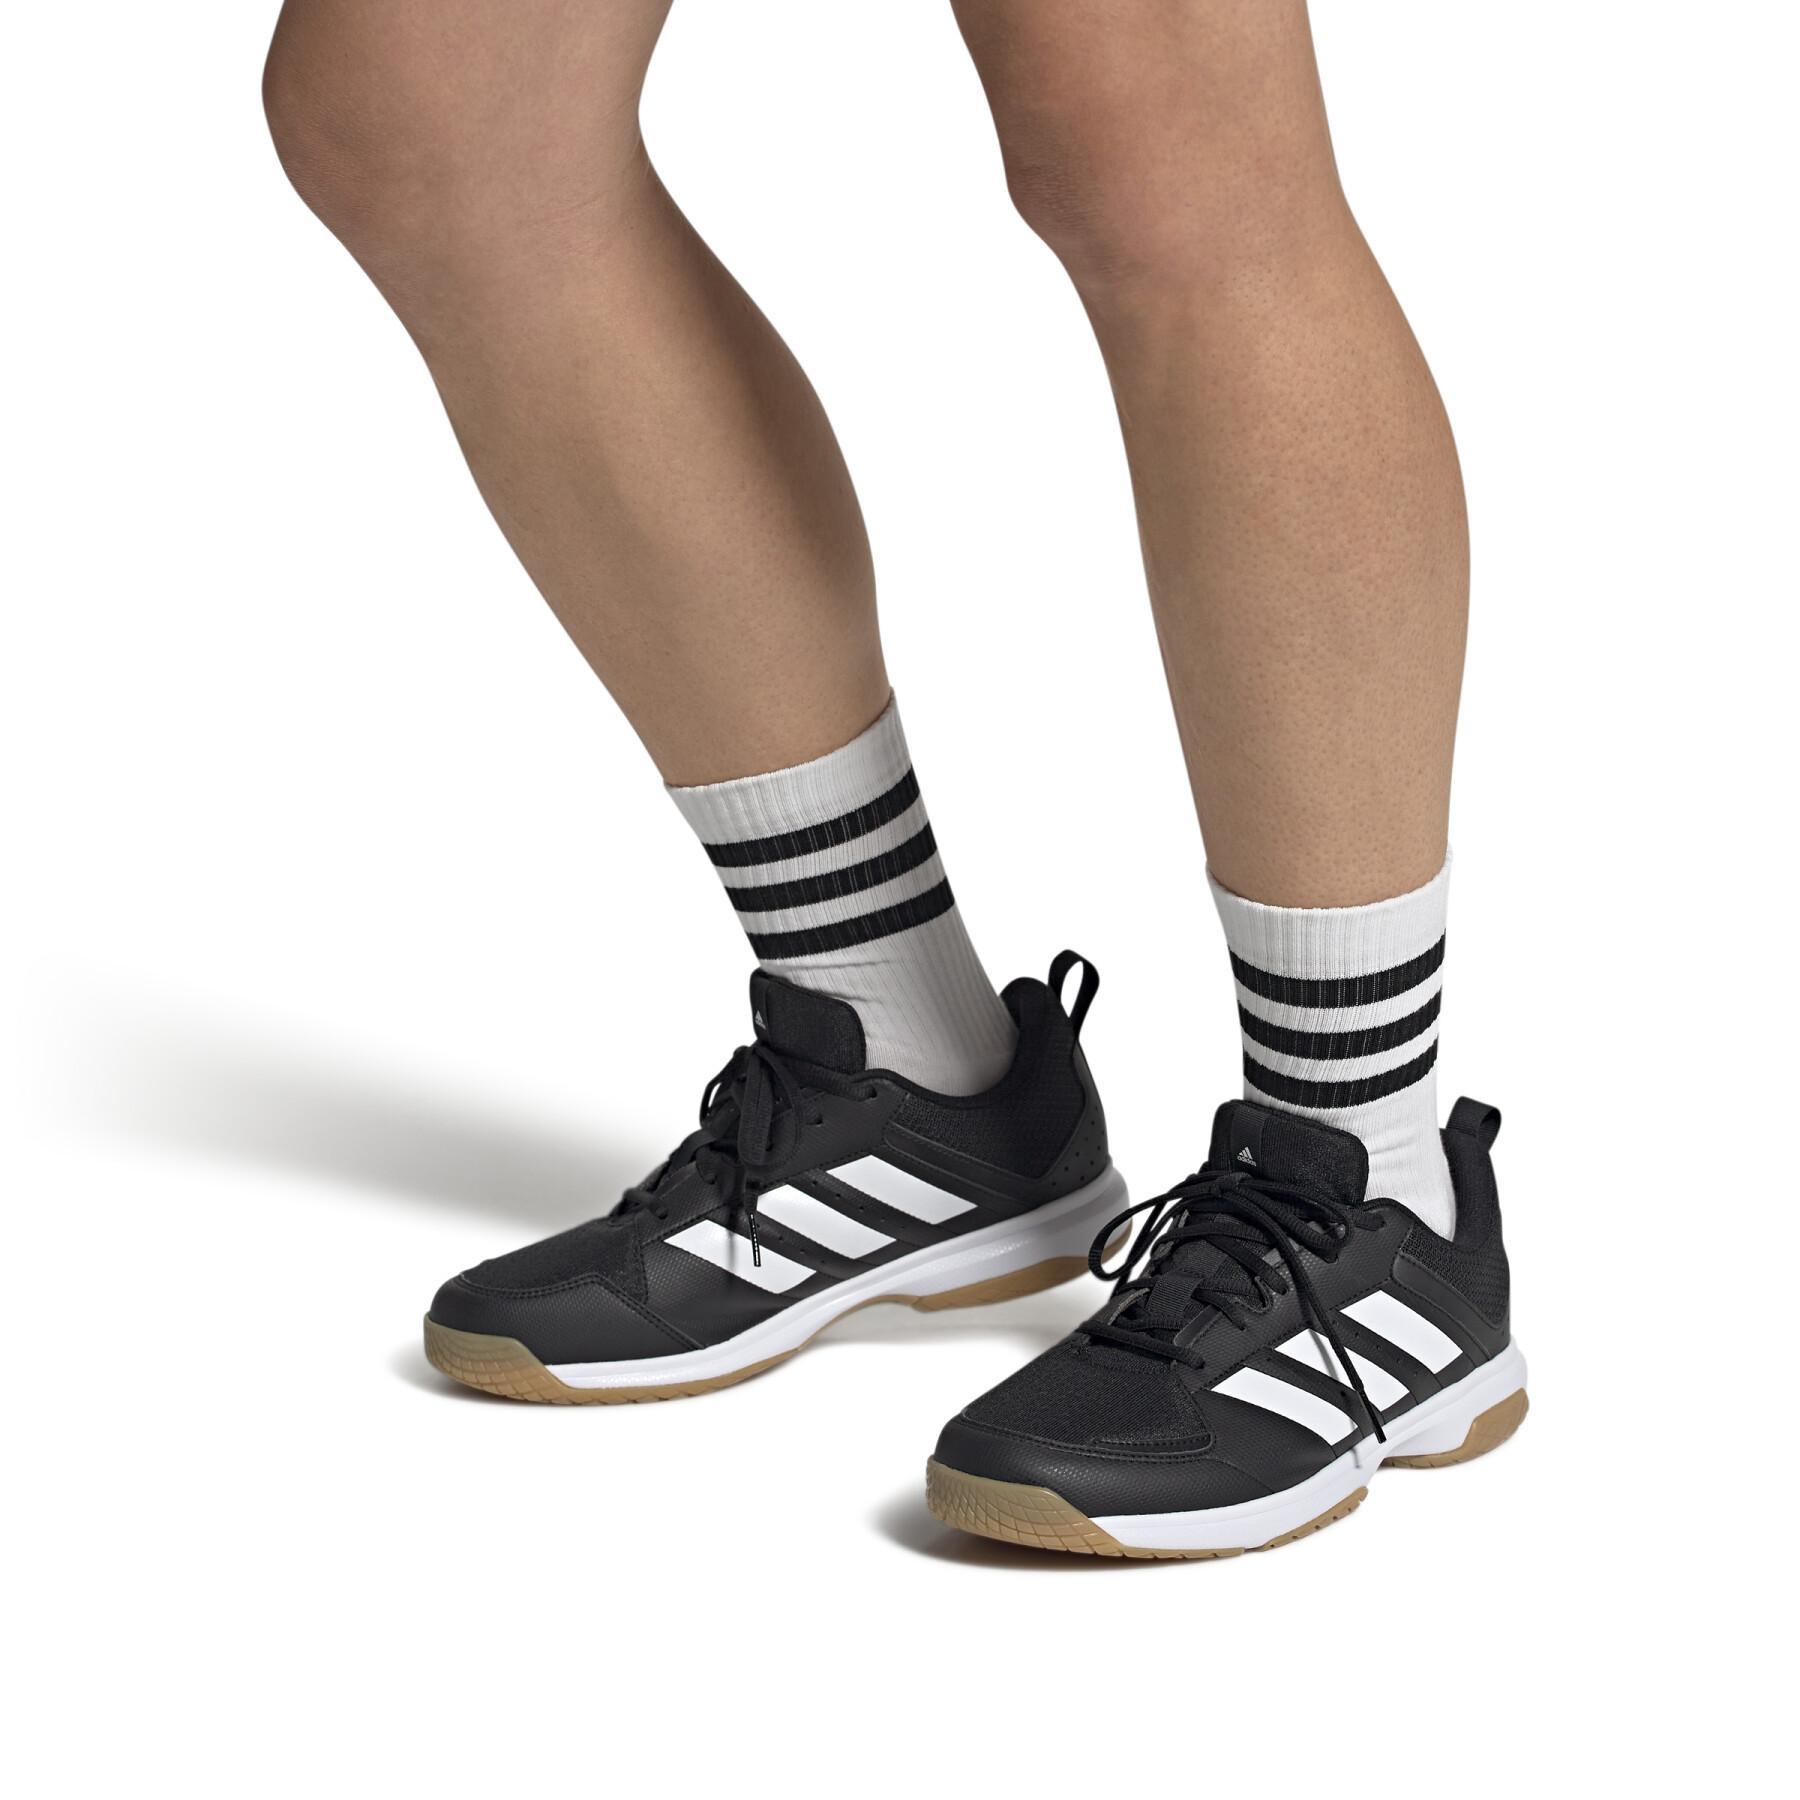 Shoes Ligra Handball 7 adidas